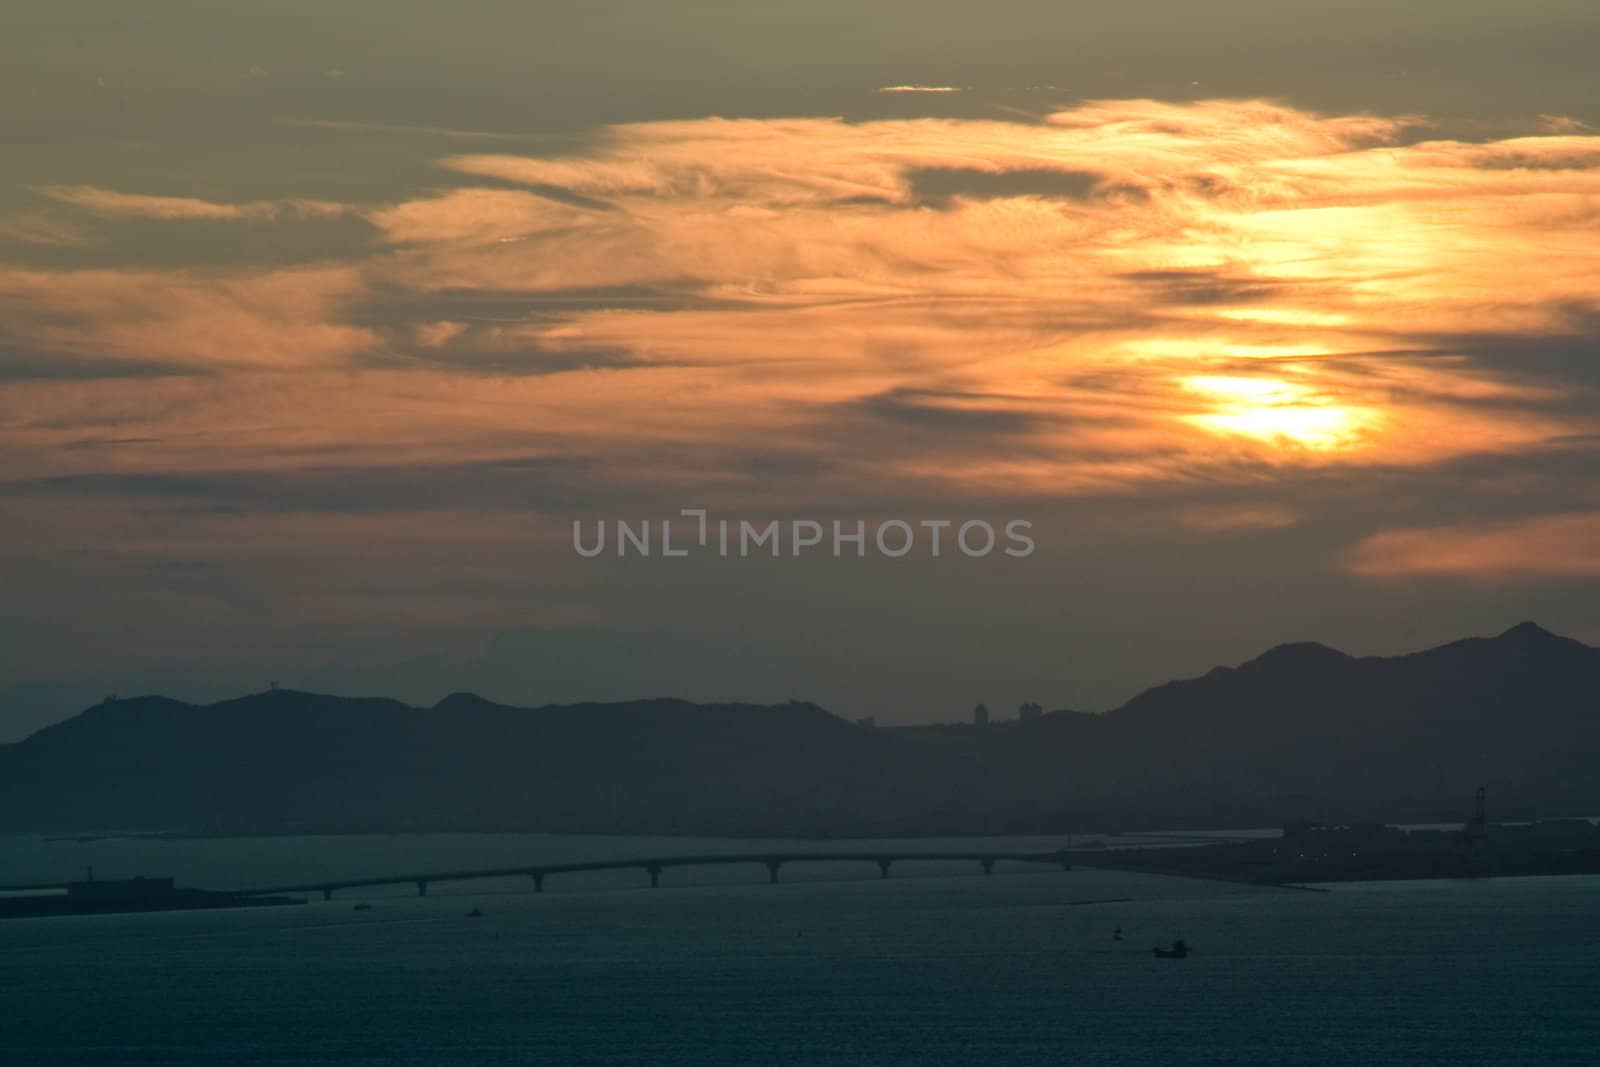 Sunset over Awaji Island by Arrxxx